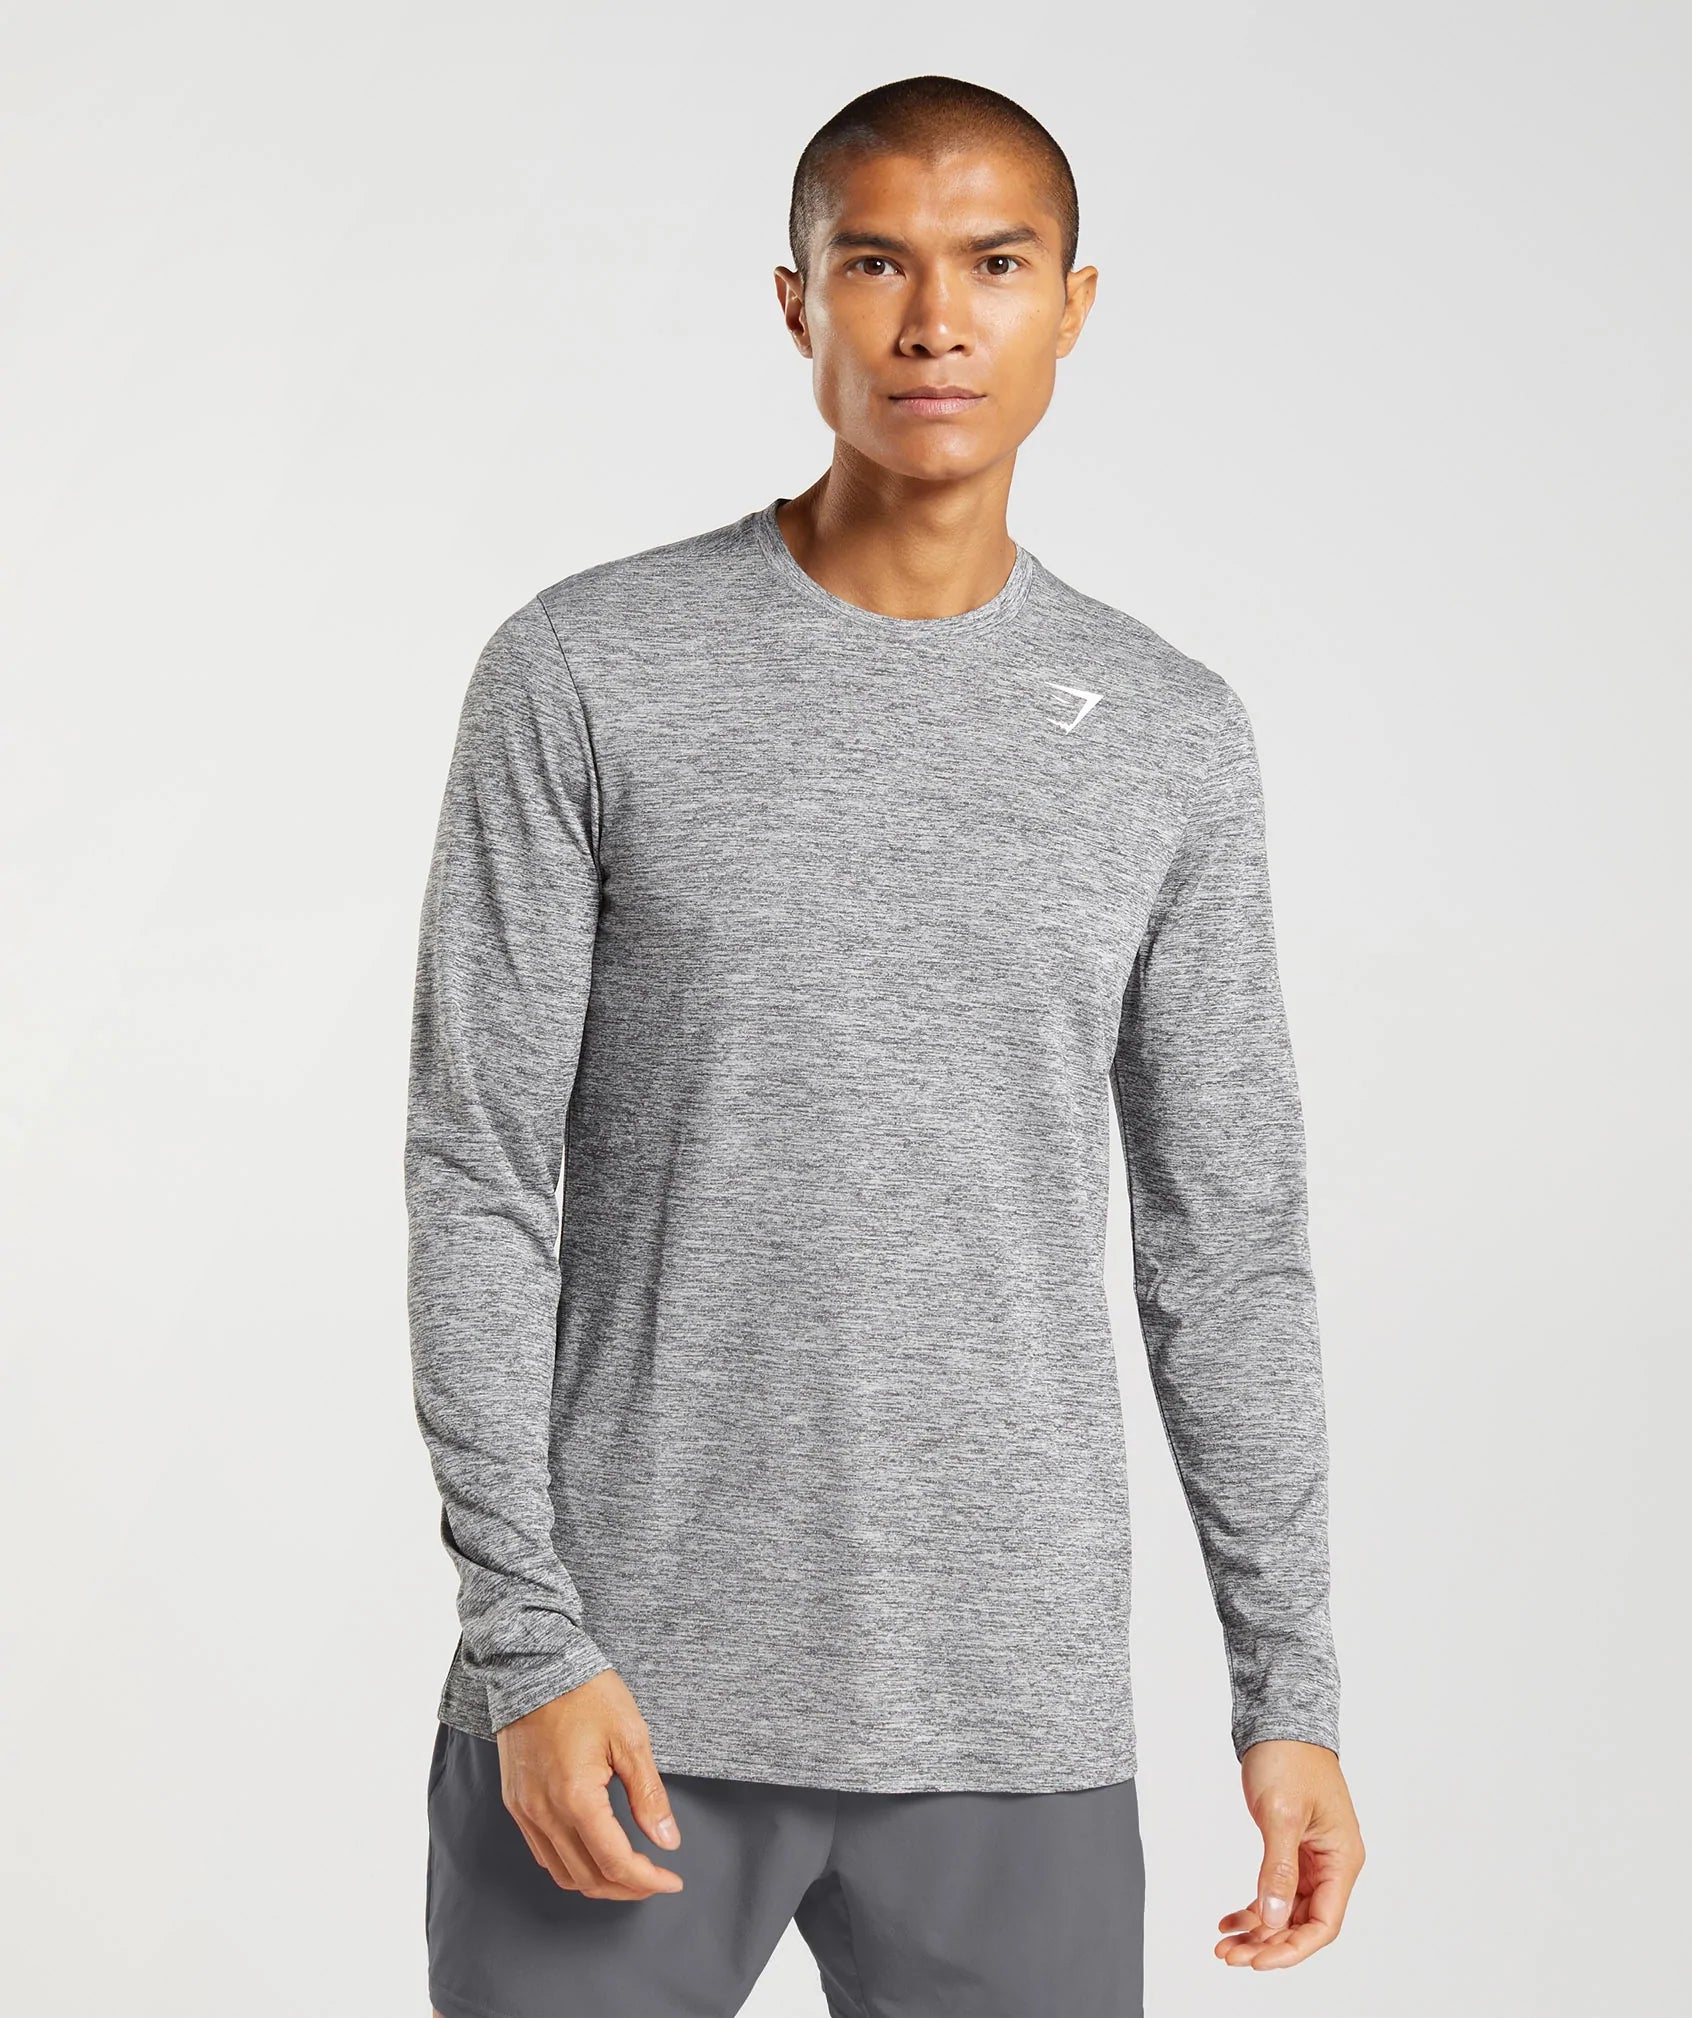 Gymshark Arrival Long Sleeve T-Shirt - Silhouette Grey/Light Grey